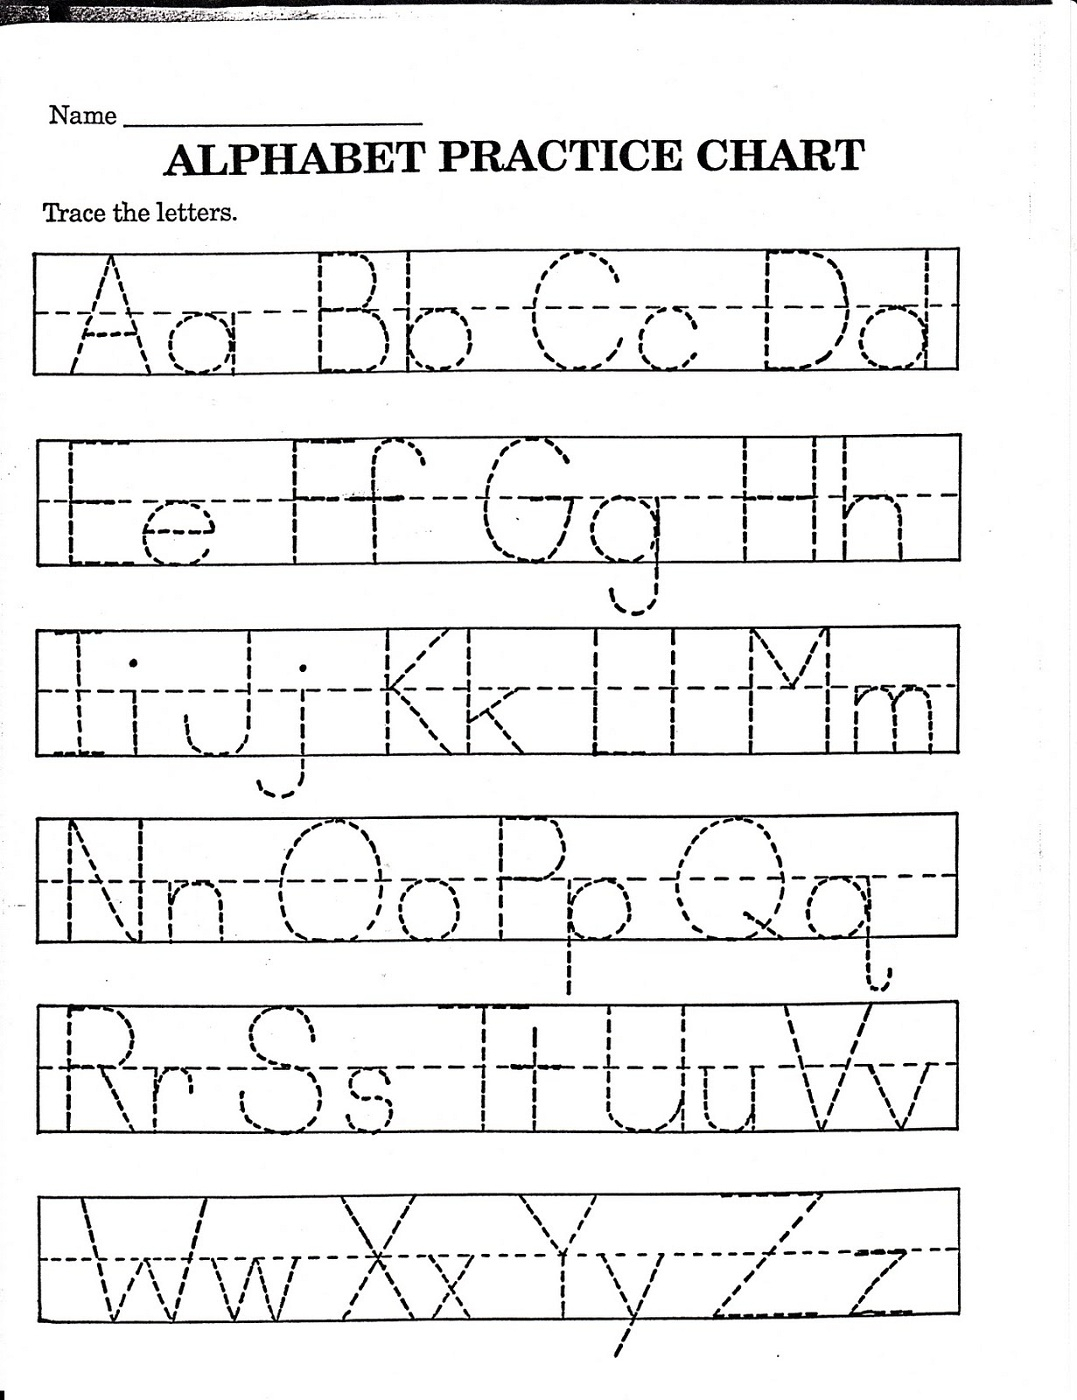 Free Collection Of Worksheets For Kindergarten, Preschool with Practice Tracing Letters For Kindergarten